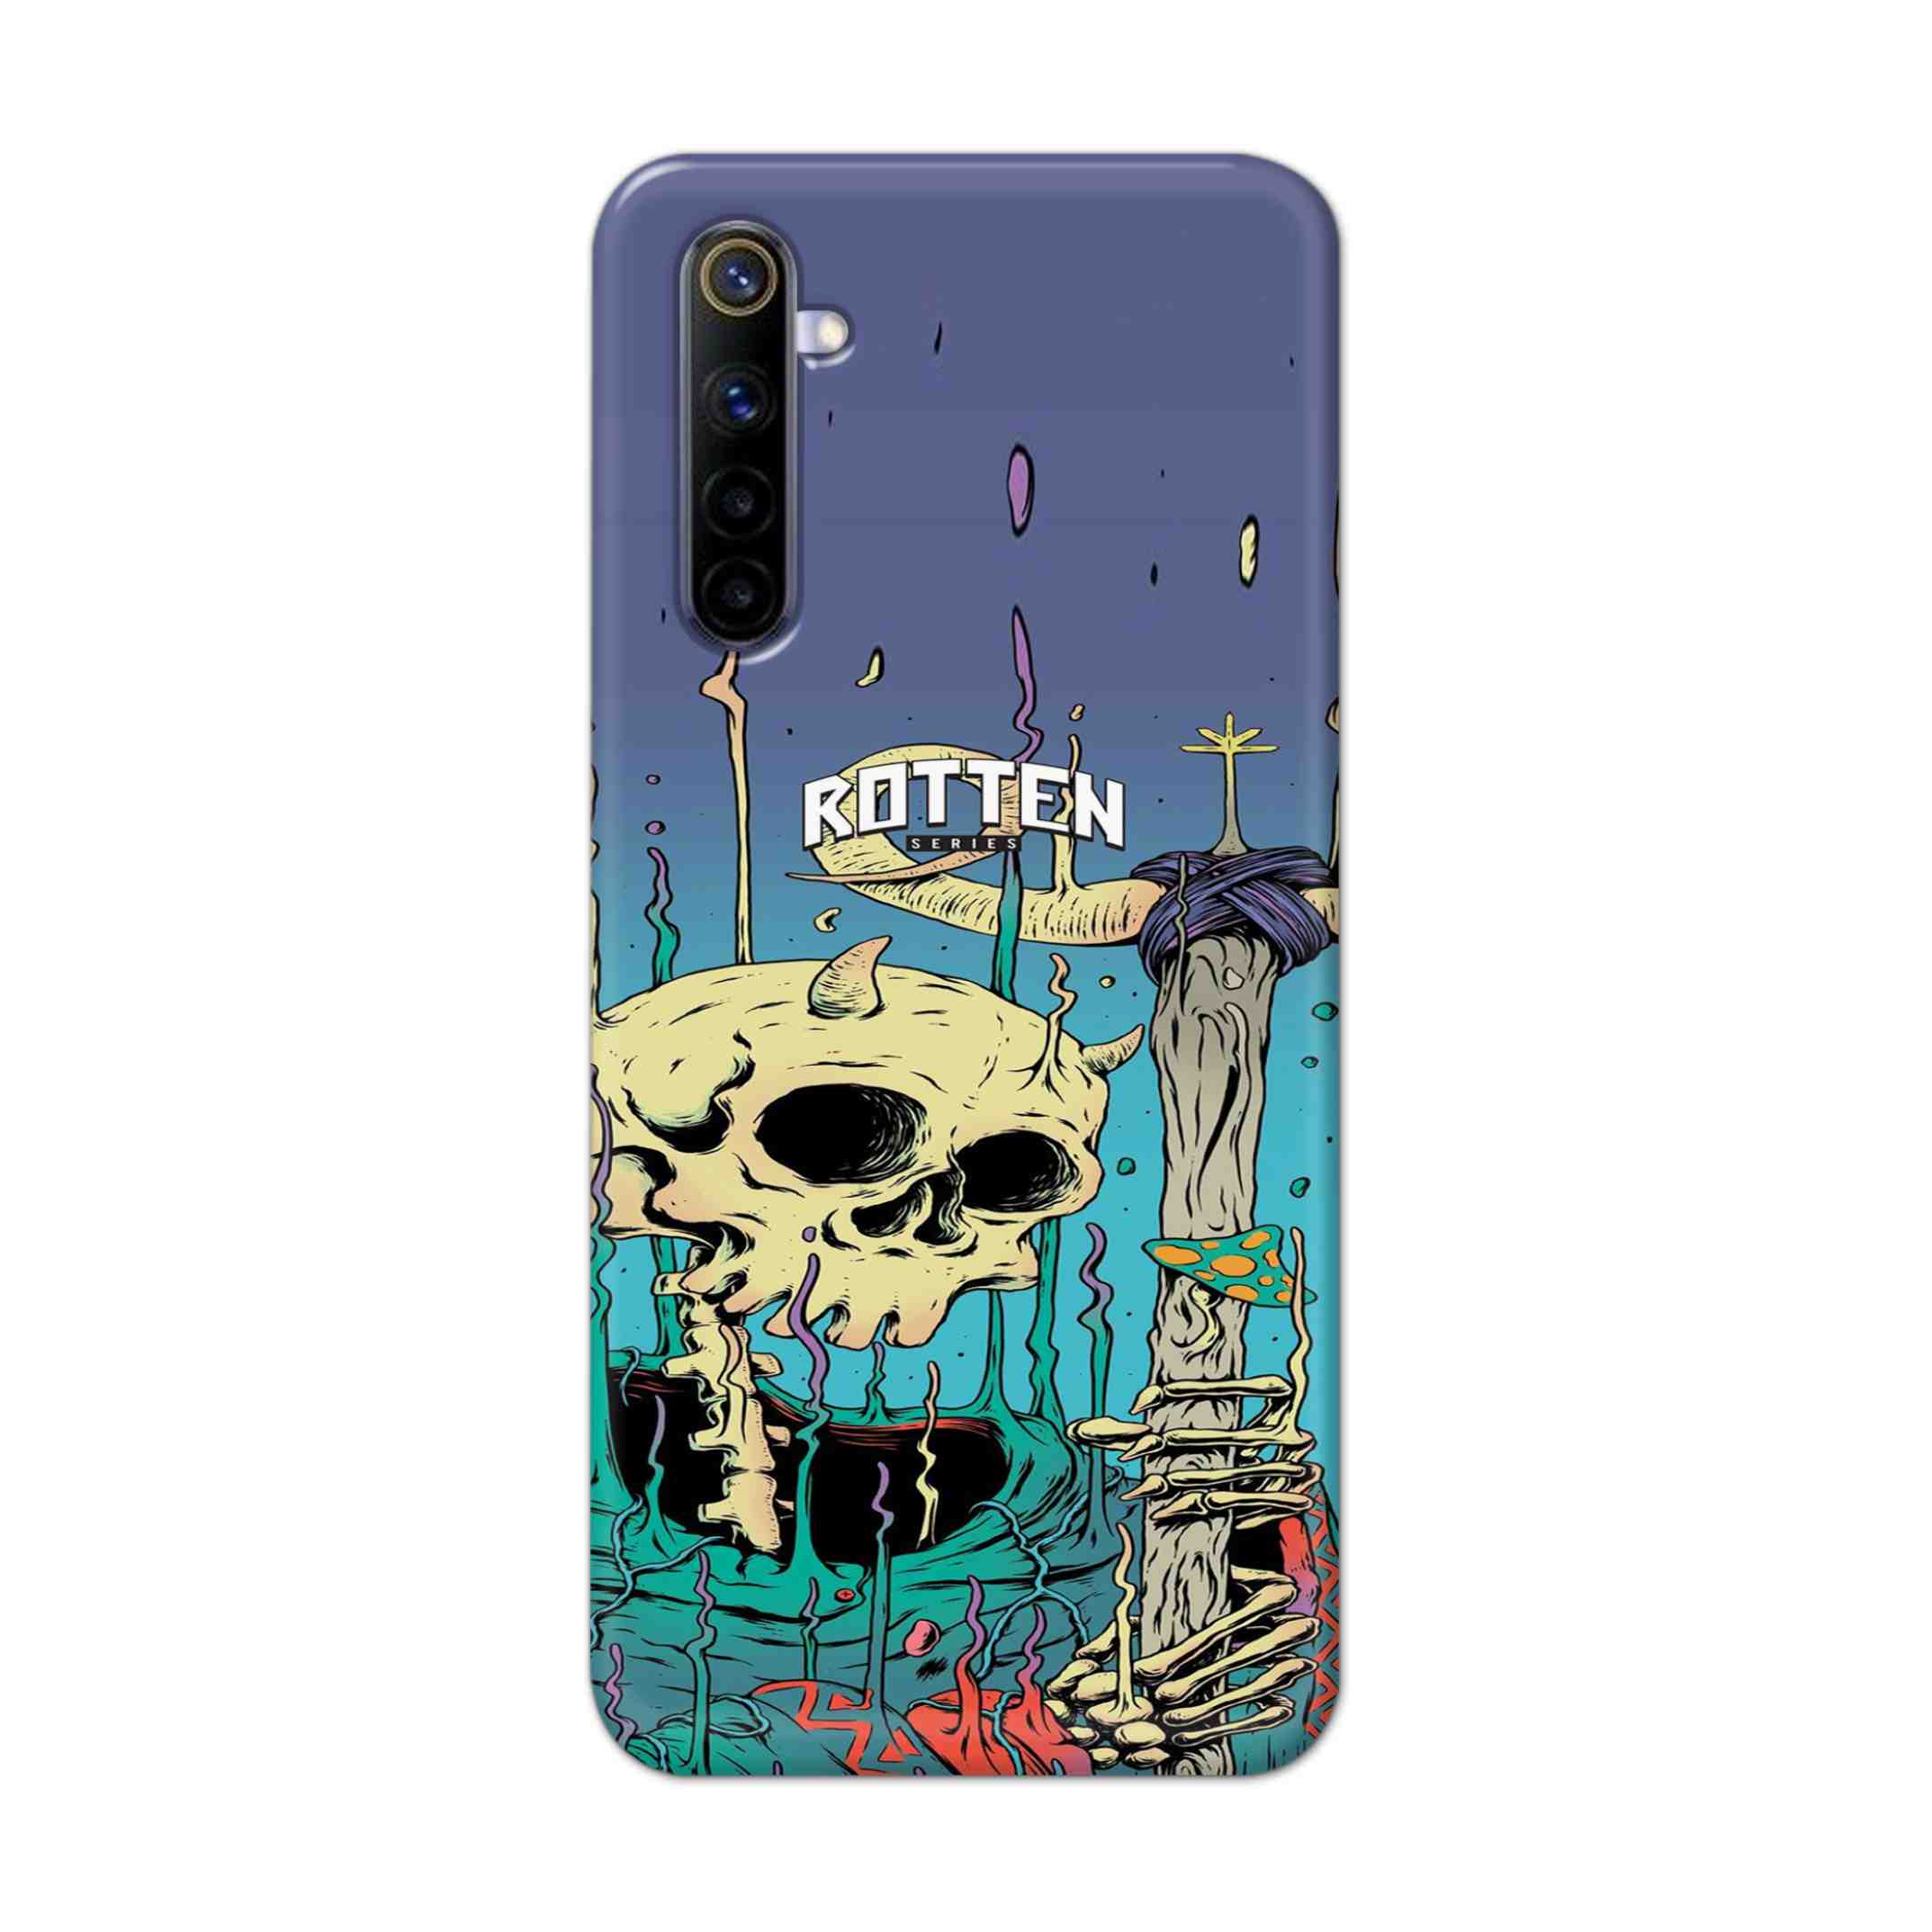 Buy Skull Hard Back Mobile Phone Case Cover For REALME 6 PRO Online